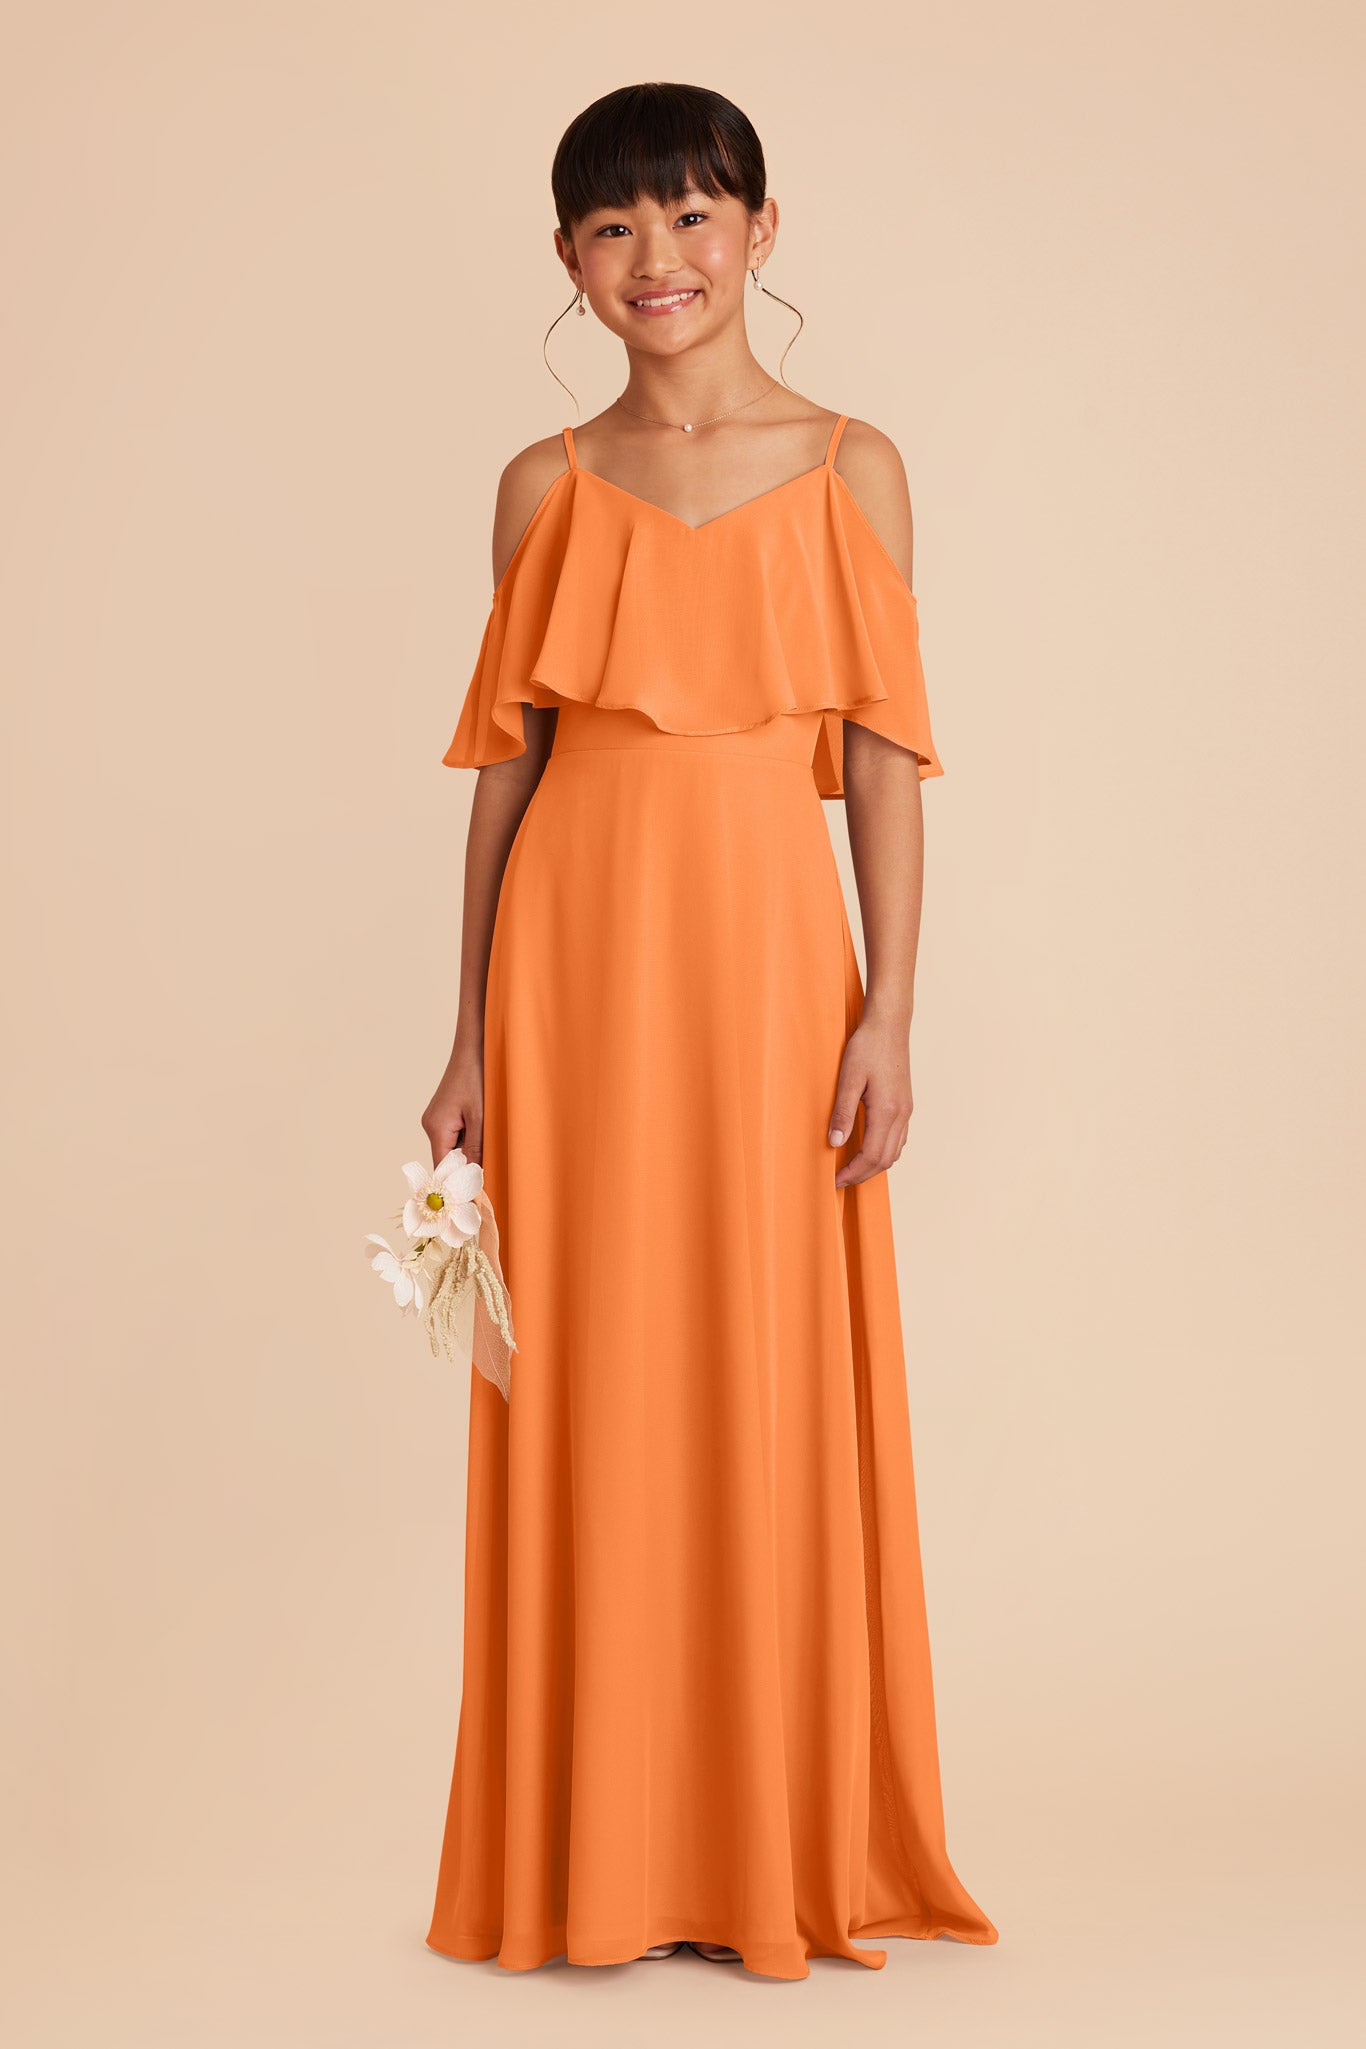 Apricot Janie Convertible Junior Dress by Birdy Grey